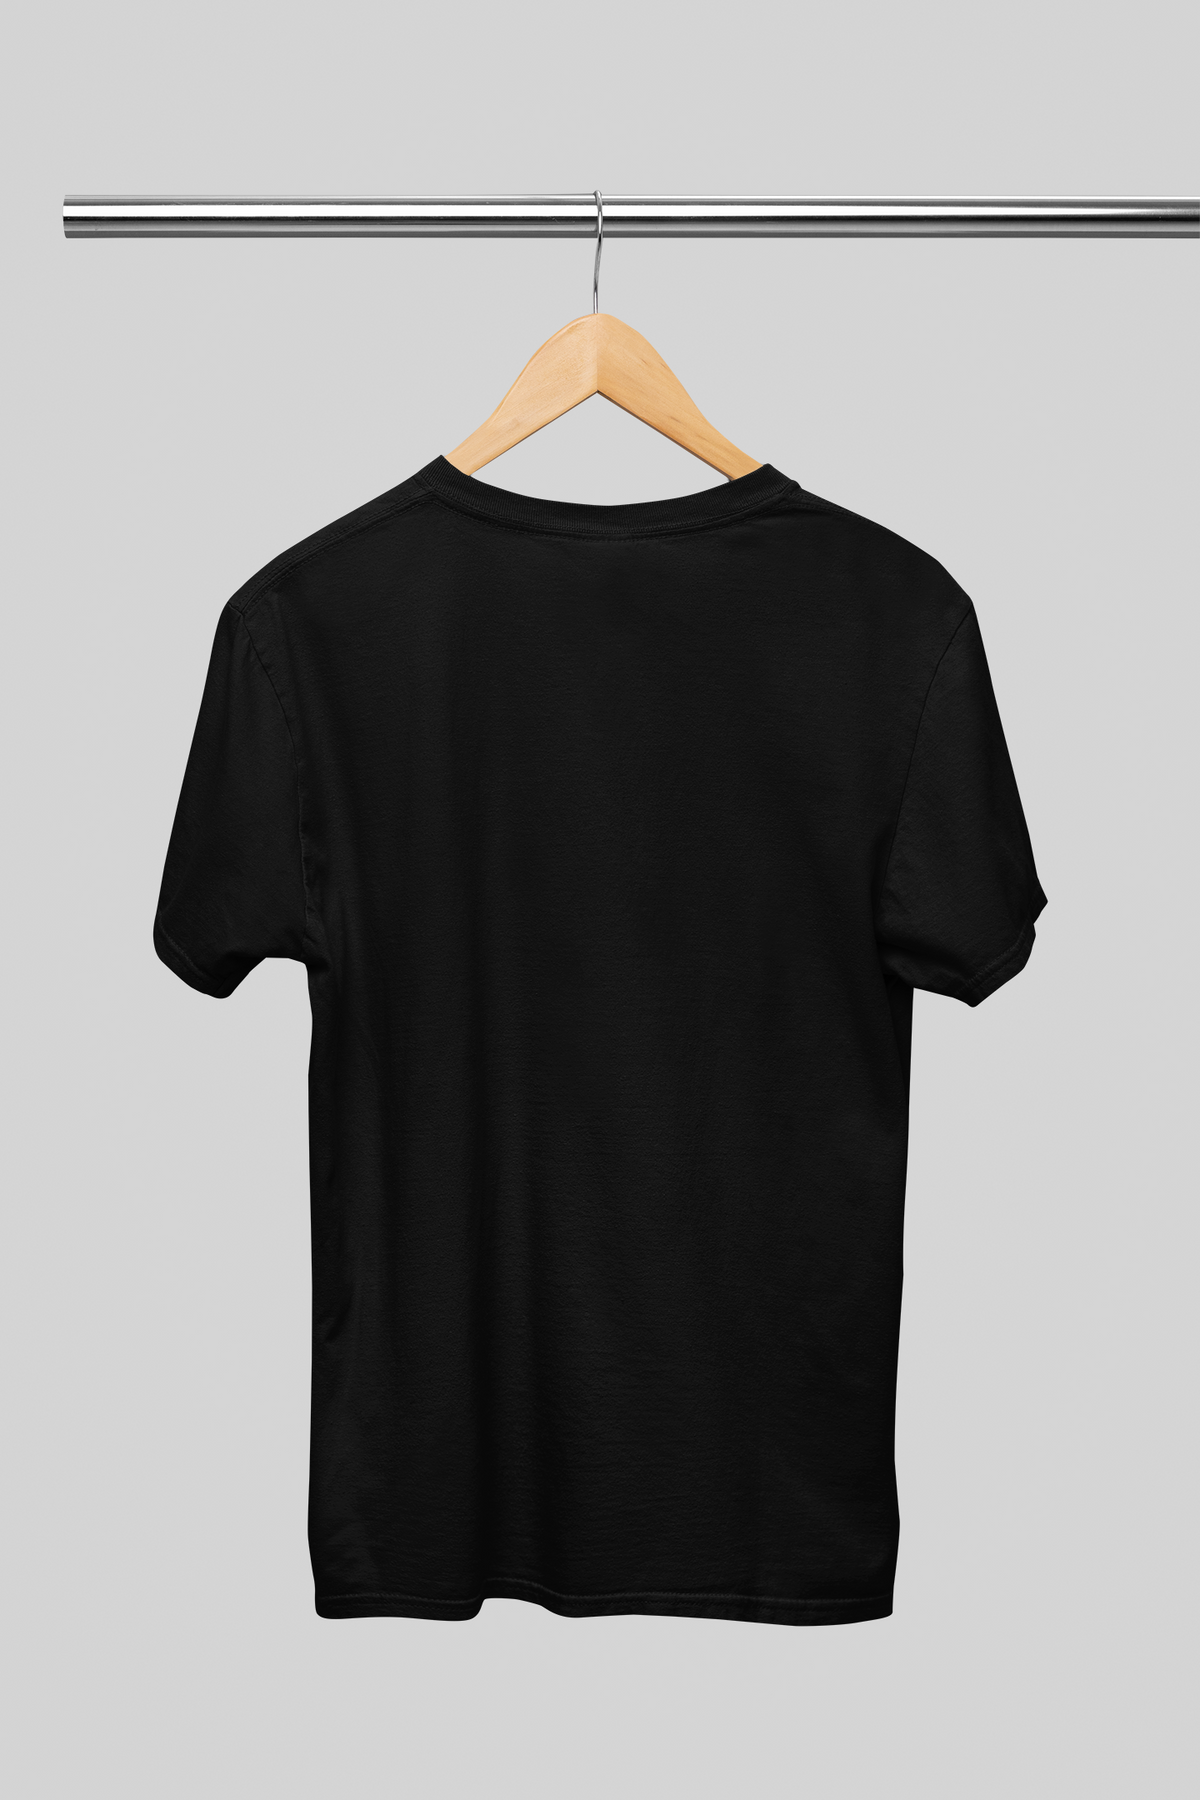 Plain Black Unisex T-shirt